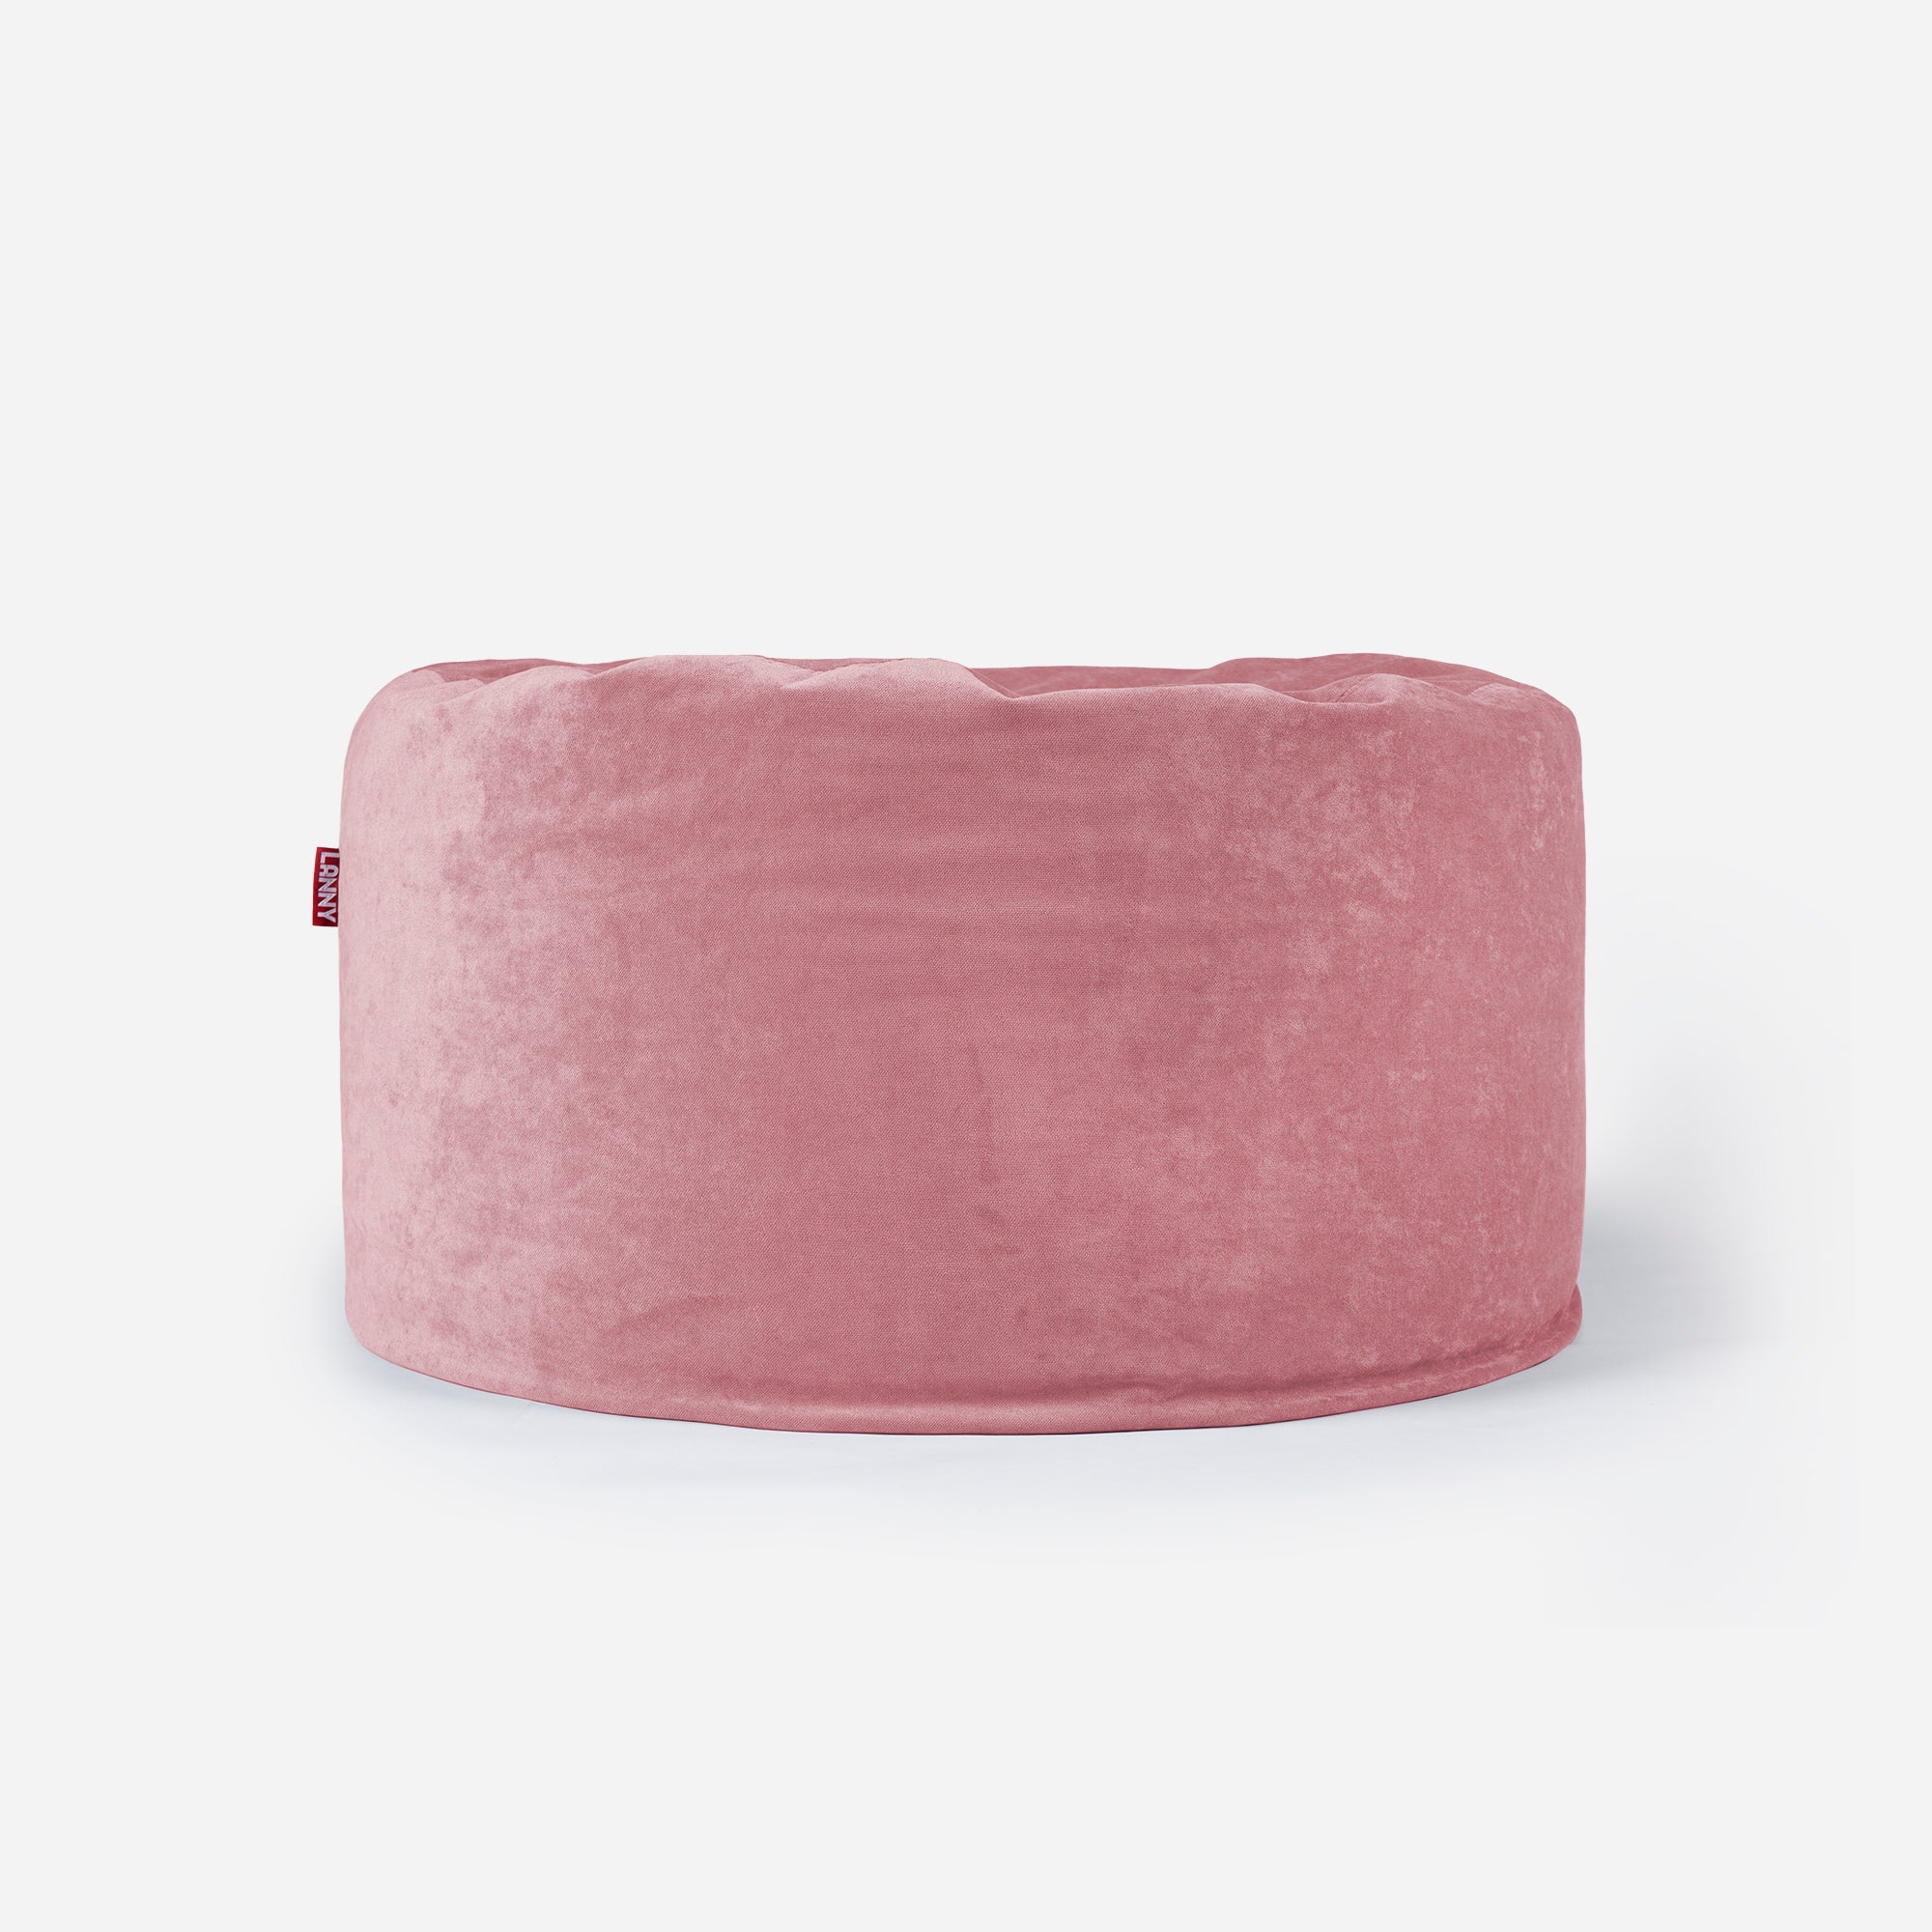 Medium Original Aldo Pink Bean Bag